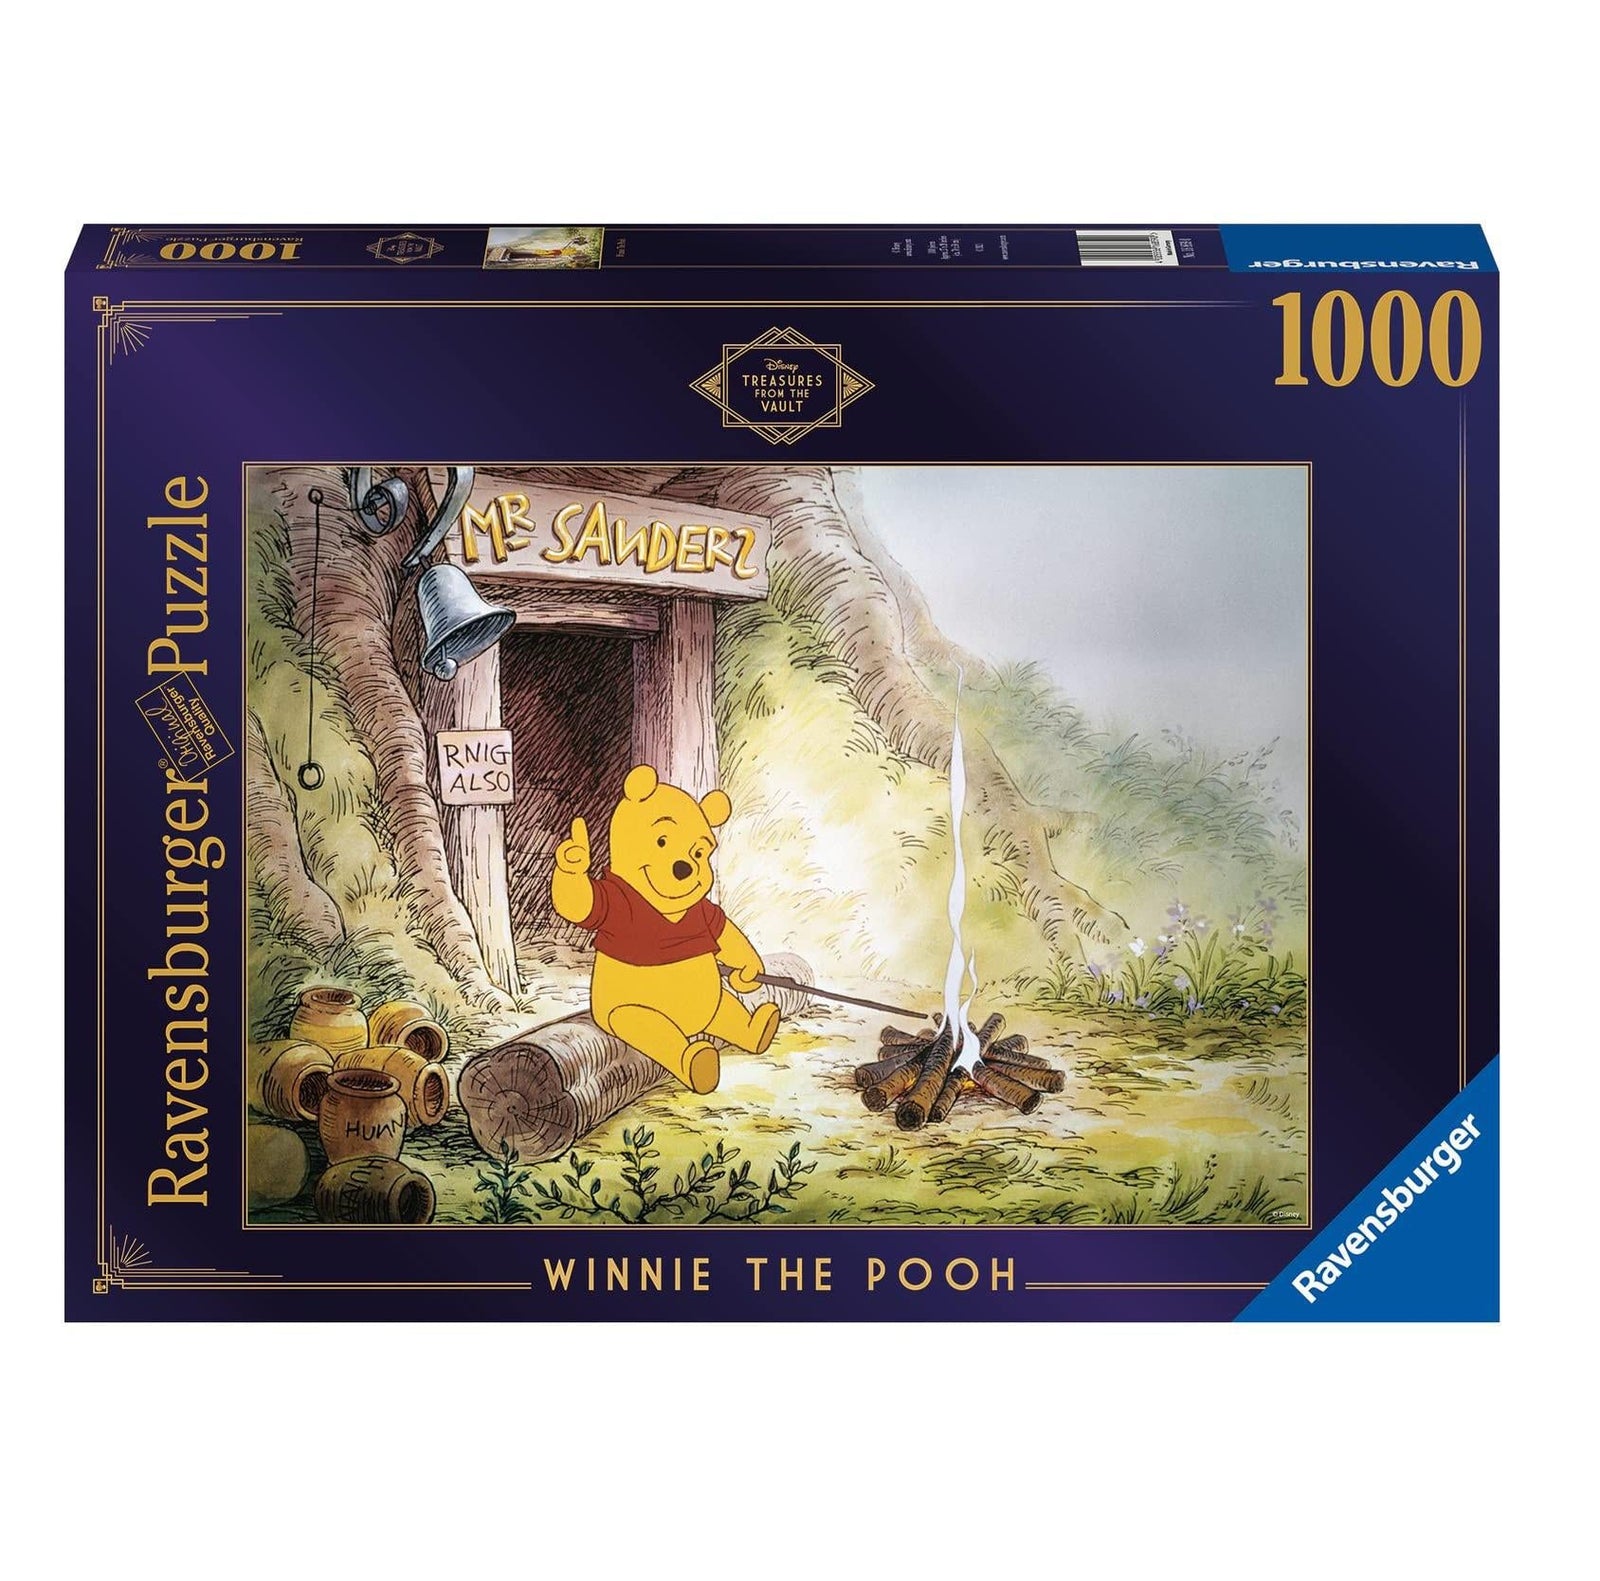 Ravensburger Disney Winnie the Pooh Collector's Edition 1000 Piece